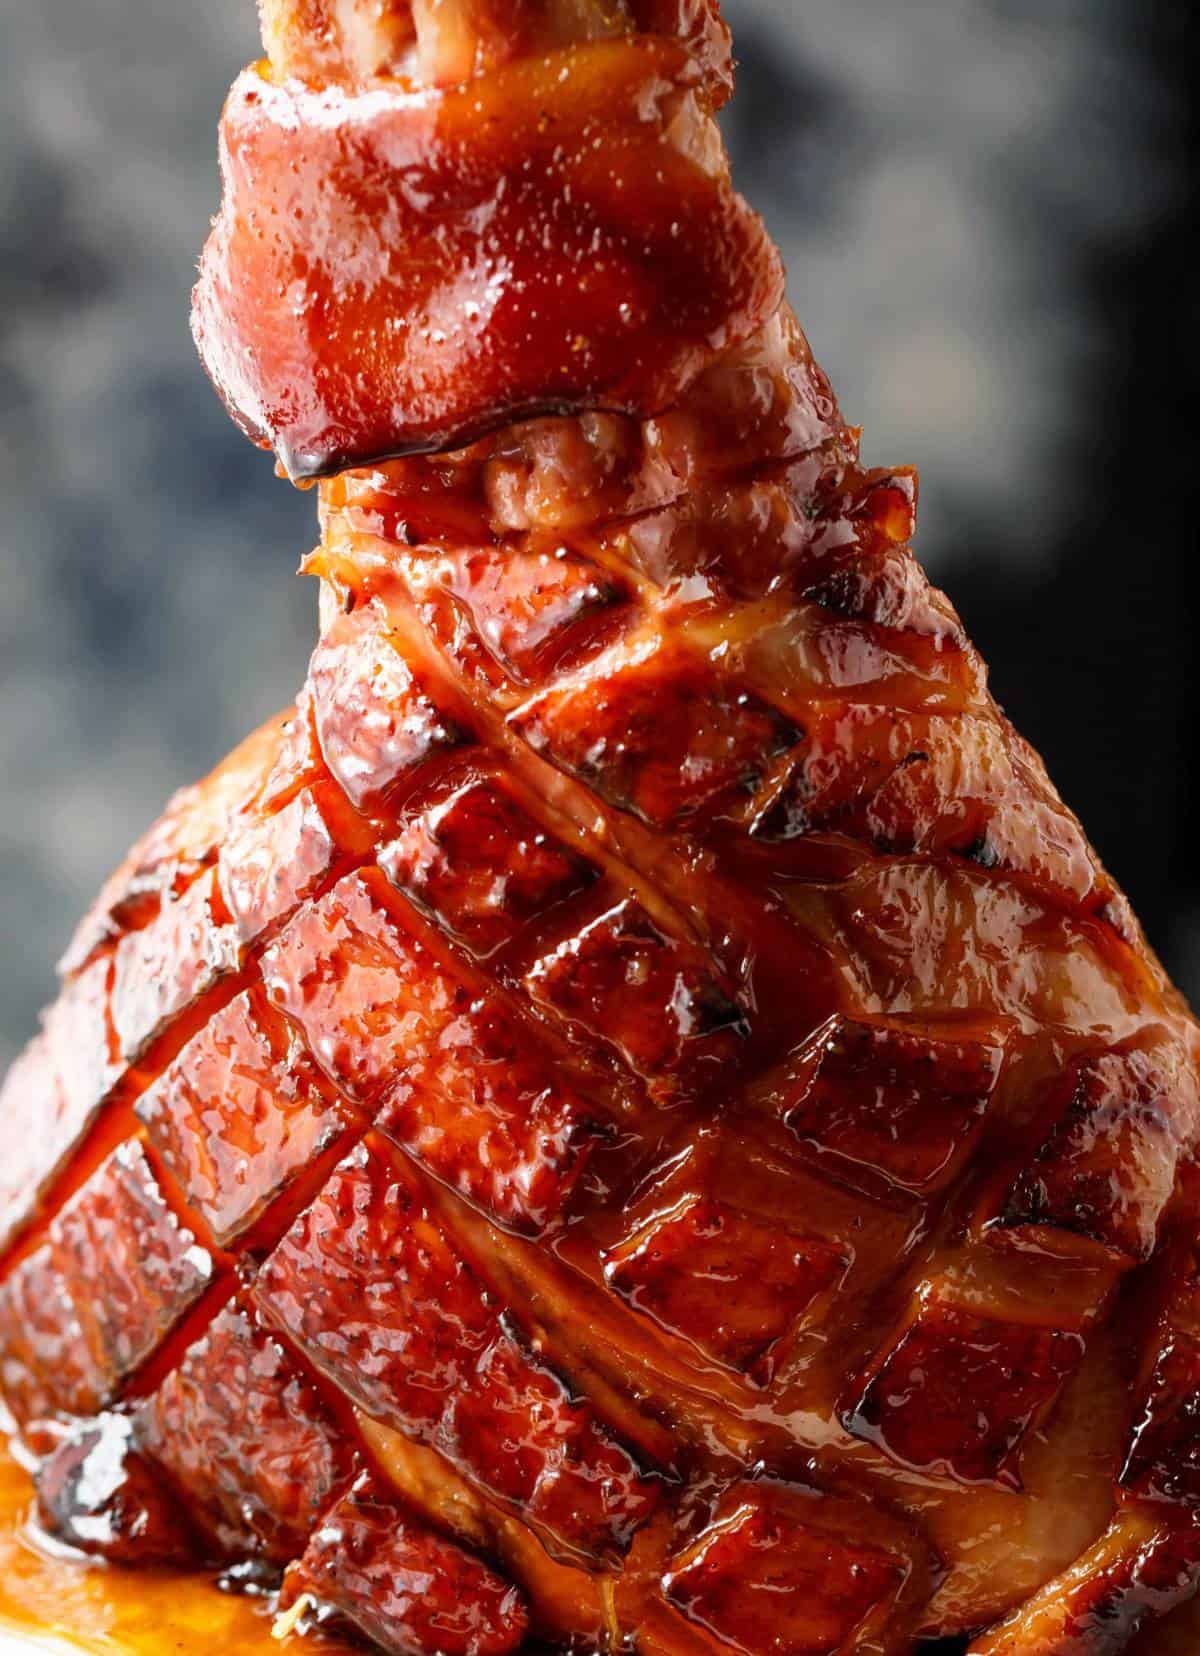 brown sugar mustard glazed ham on white plate - gourmet meat recipe